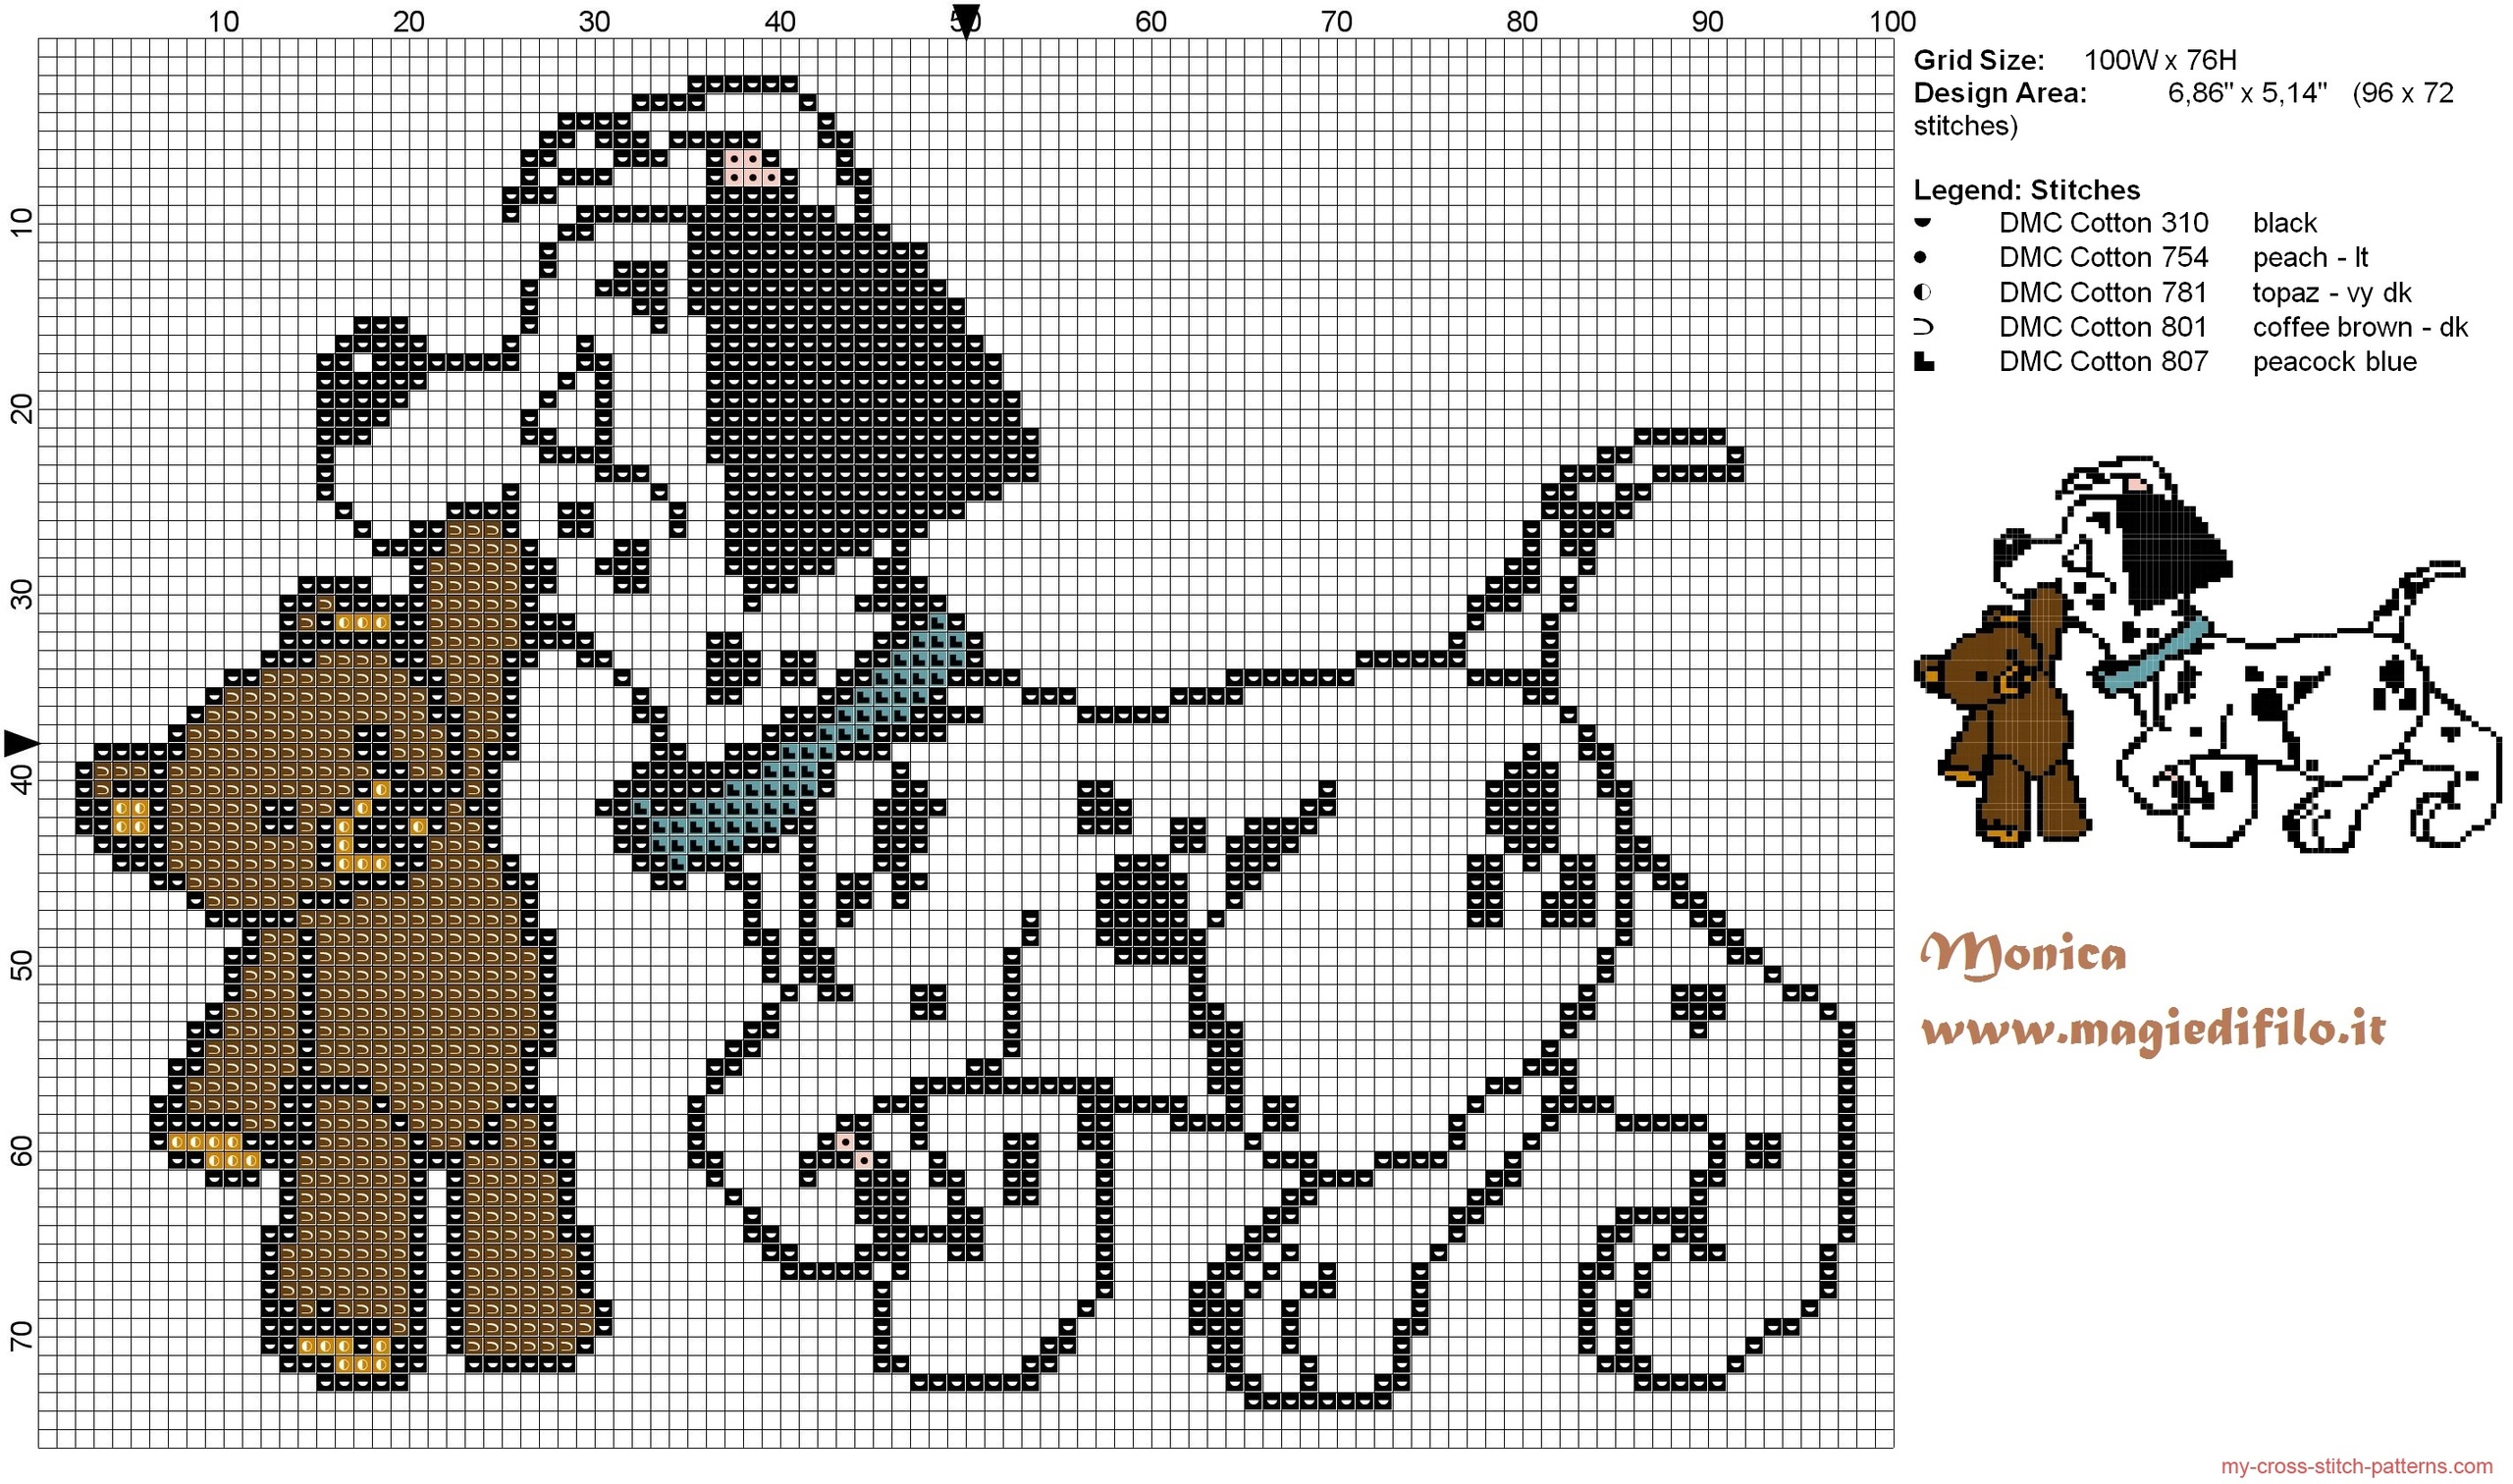 dalmatian_puppy_with_teddy_bear_cross_stitch_pattern